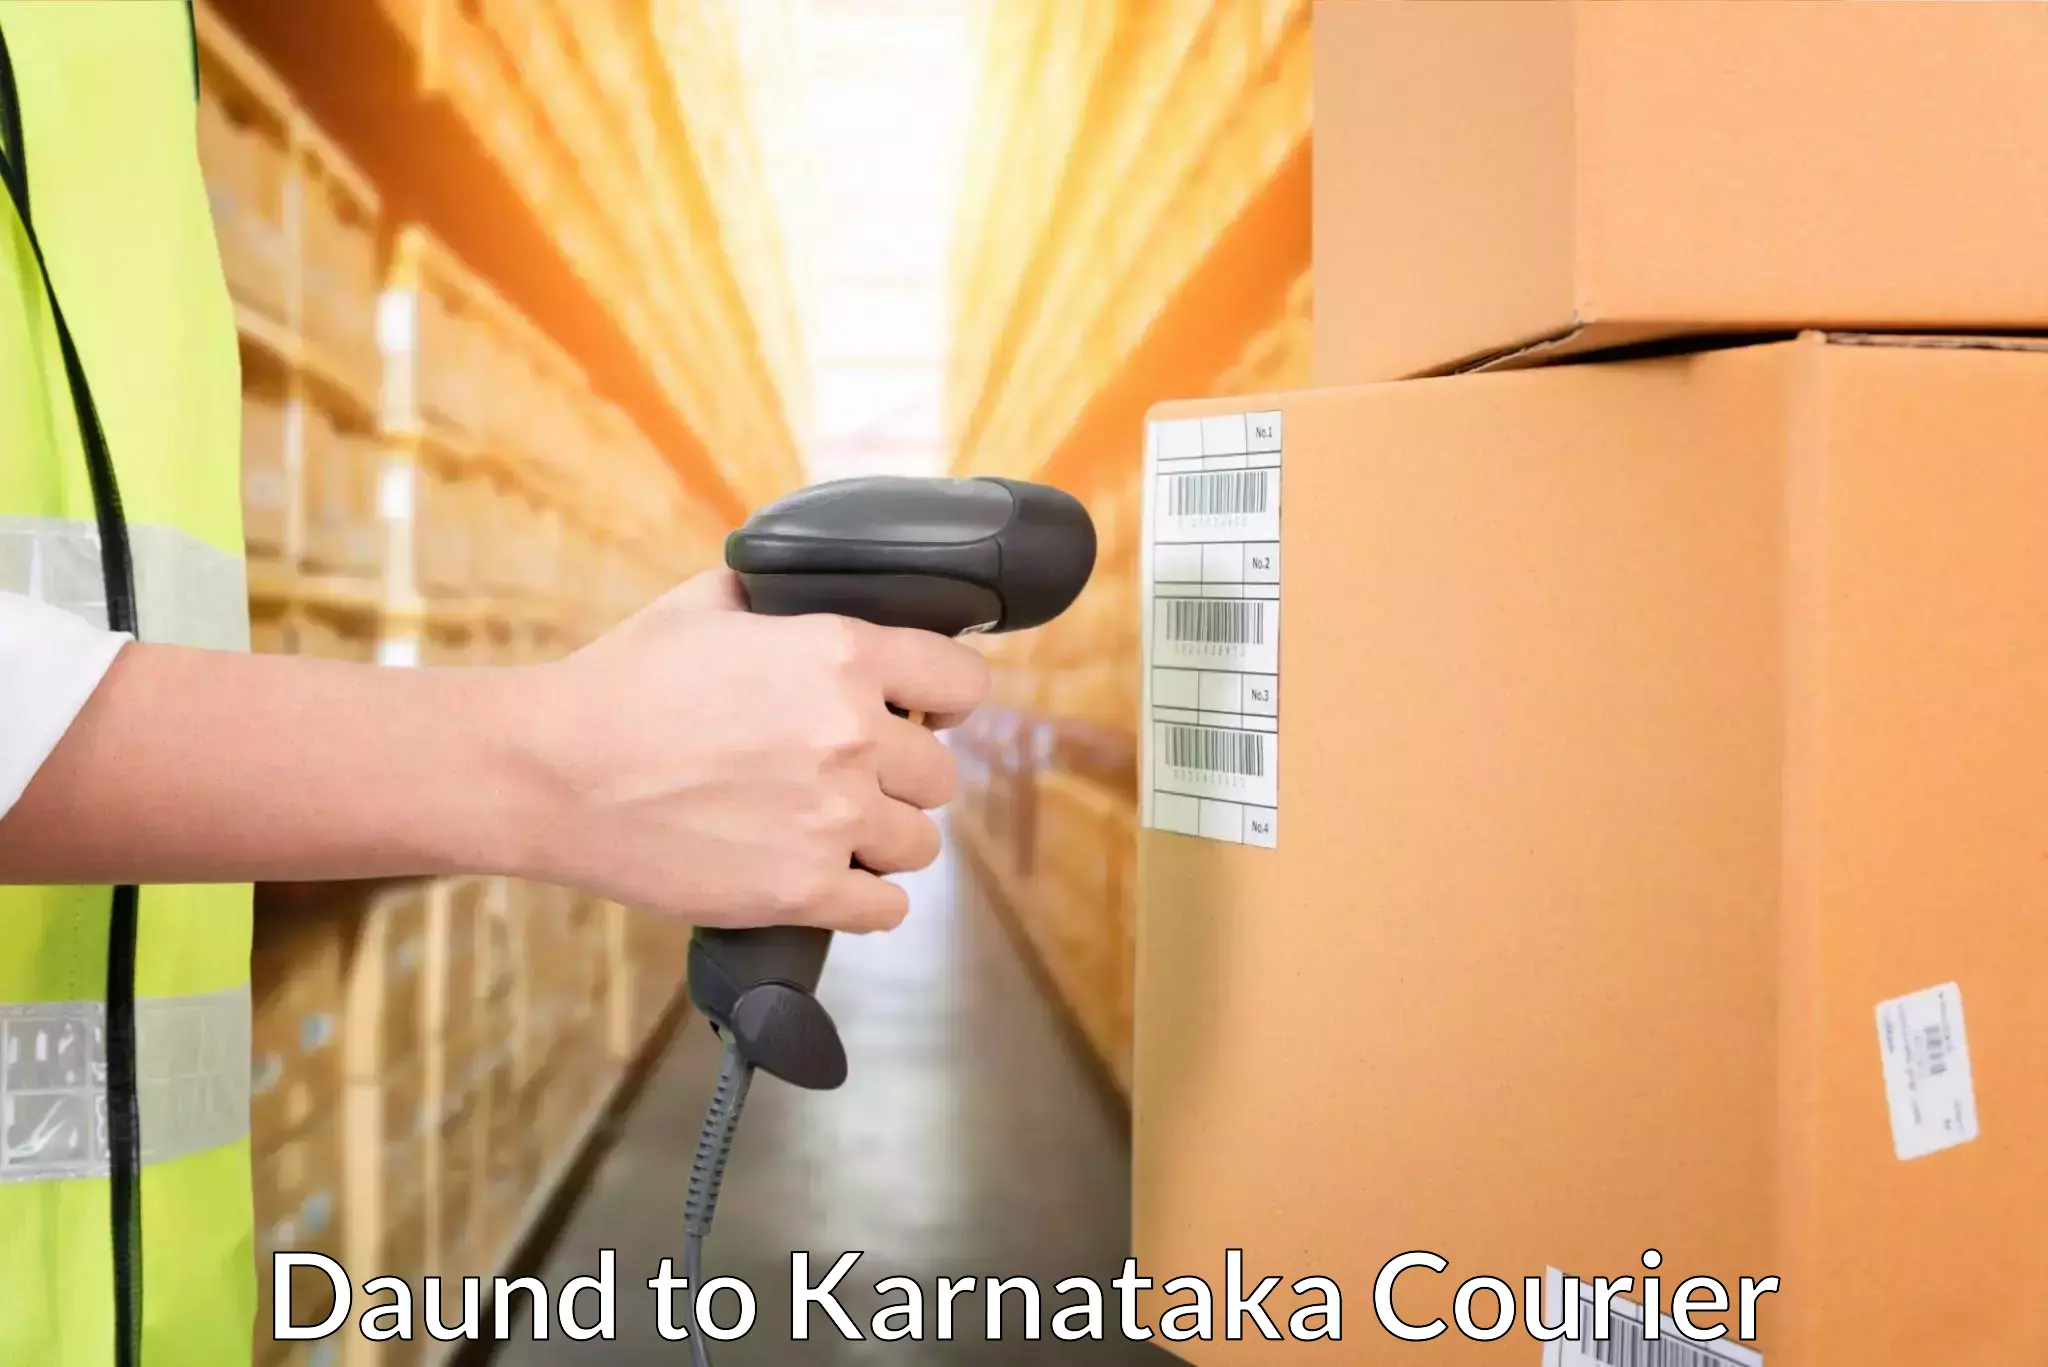 Multi-service courier options Daund to Kanjarakatte